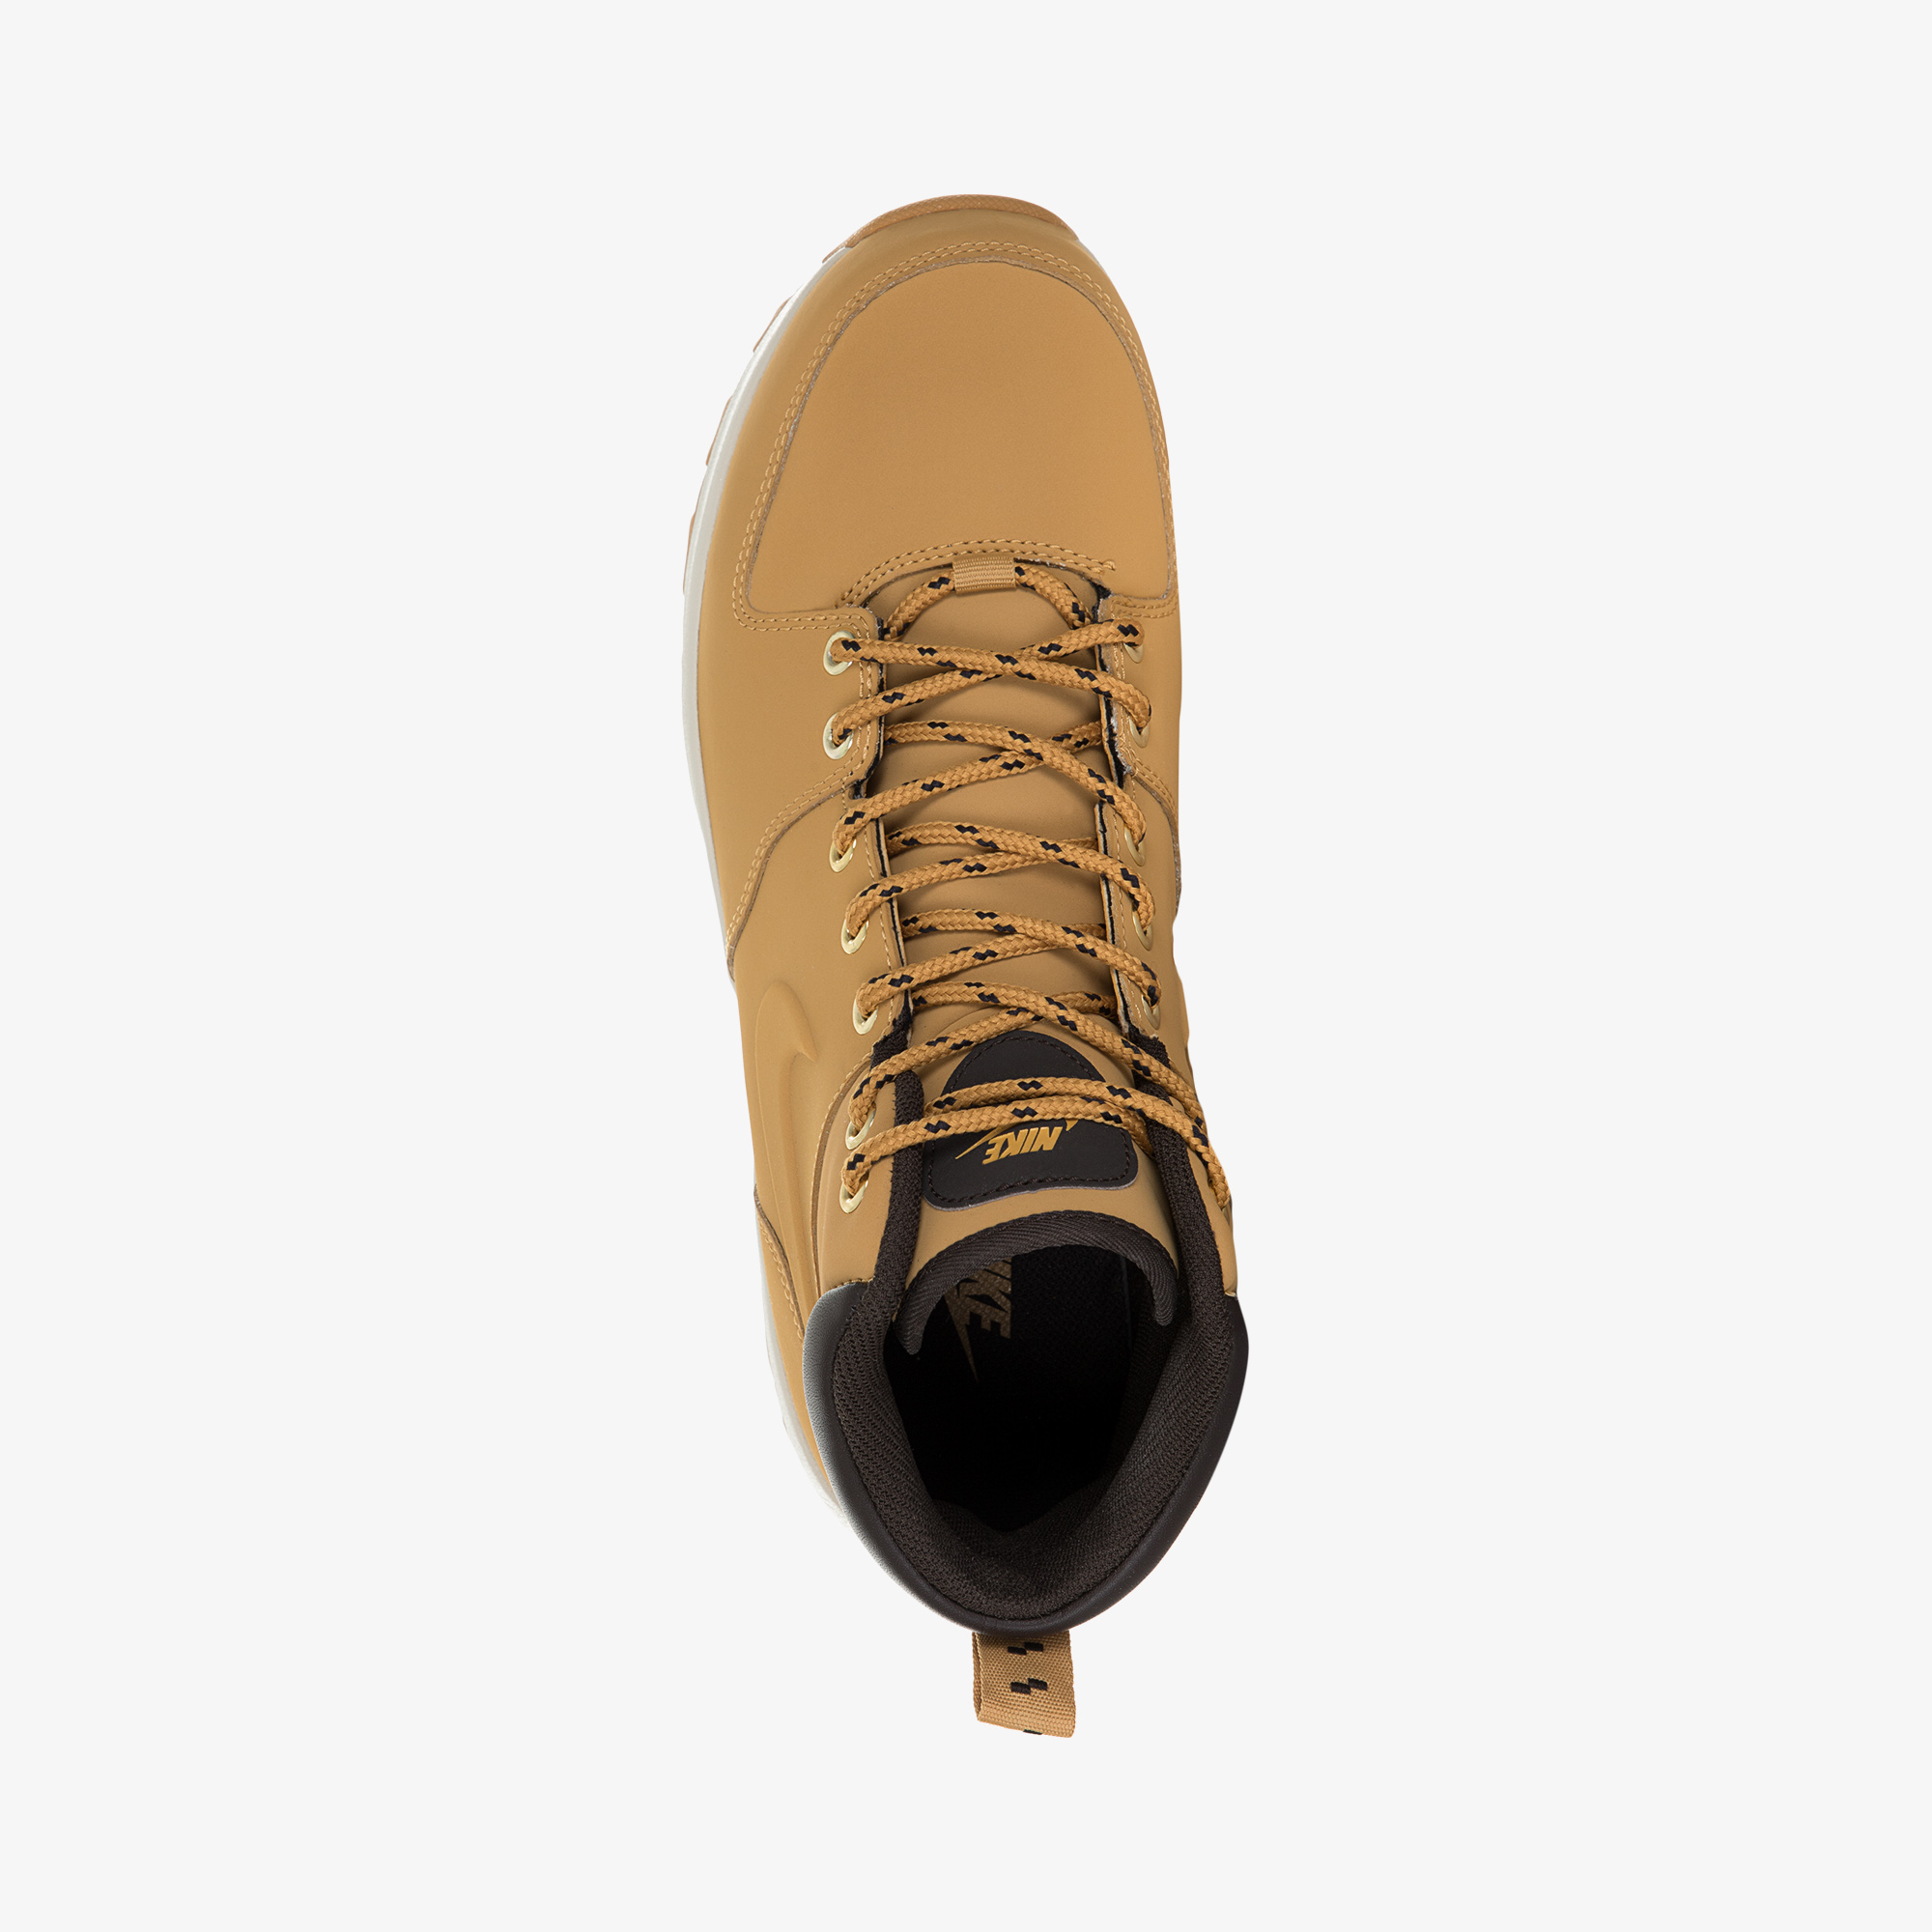 Nike 454350-N06-700, размер Да, цвет коричневый 454350-700 - фото 3